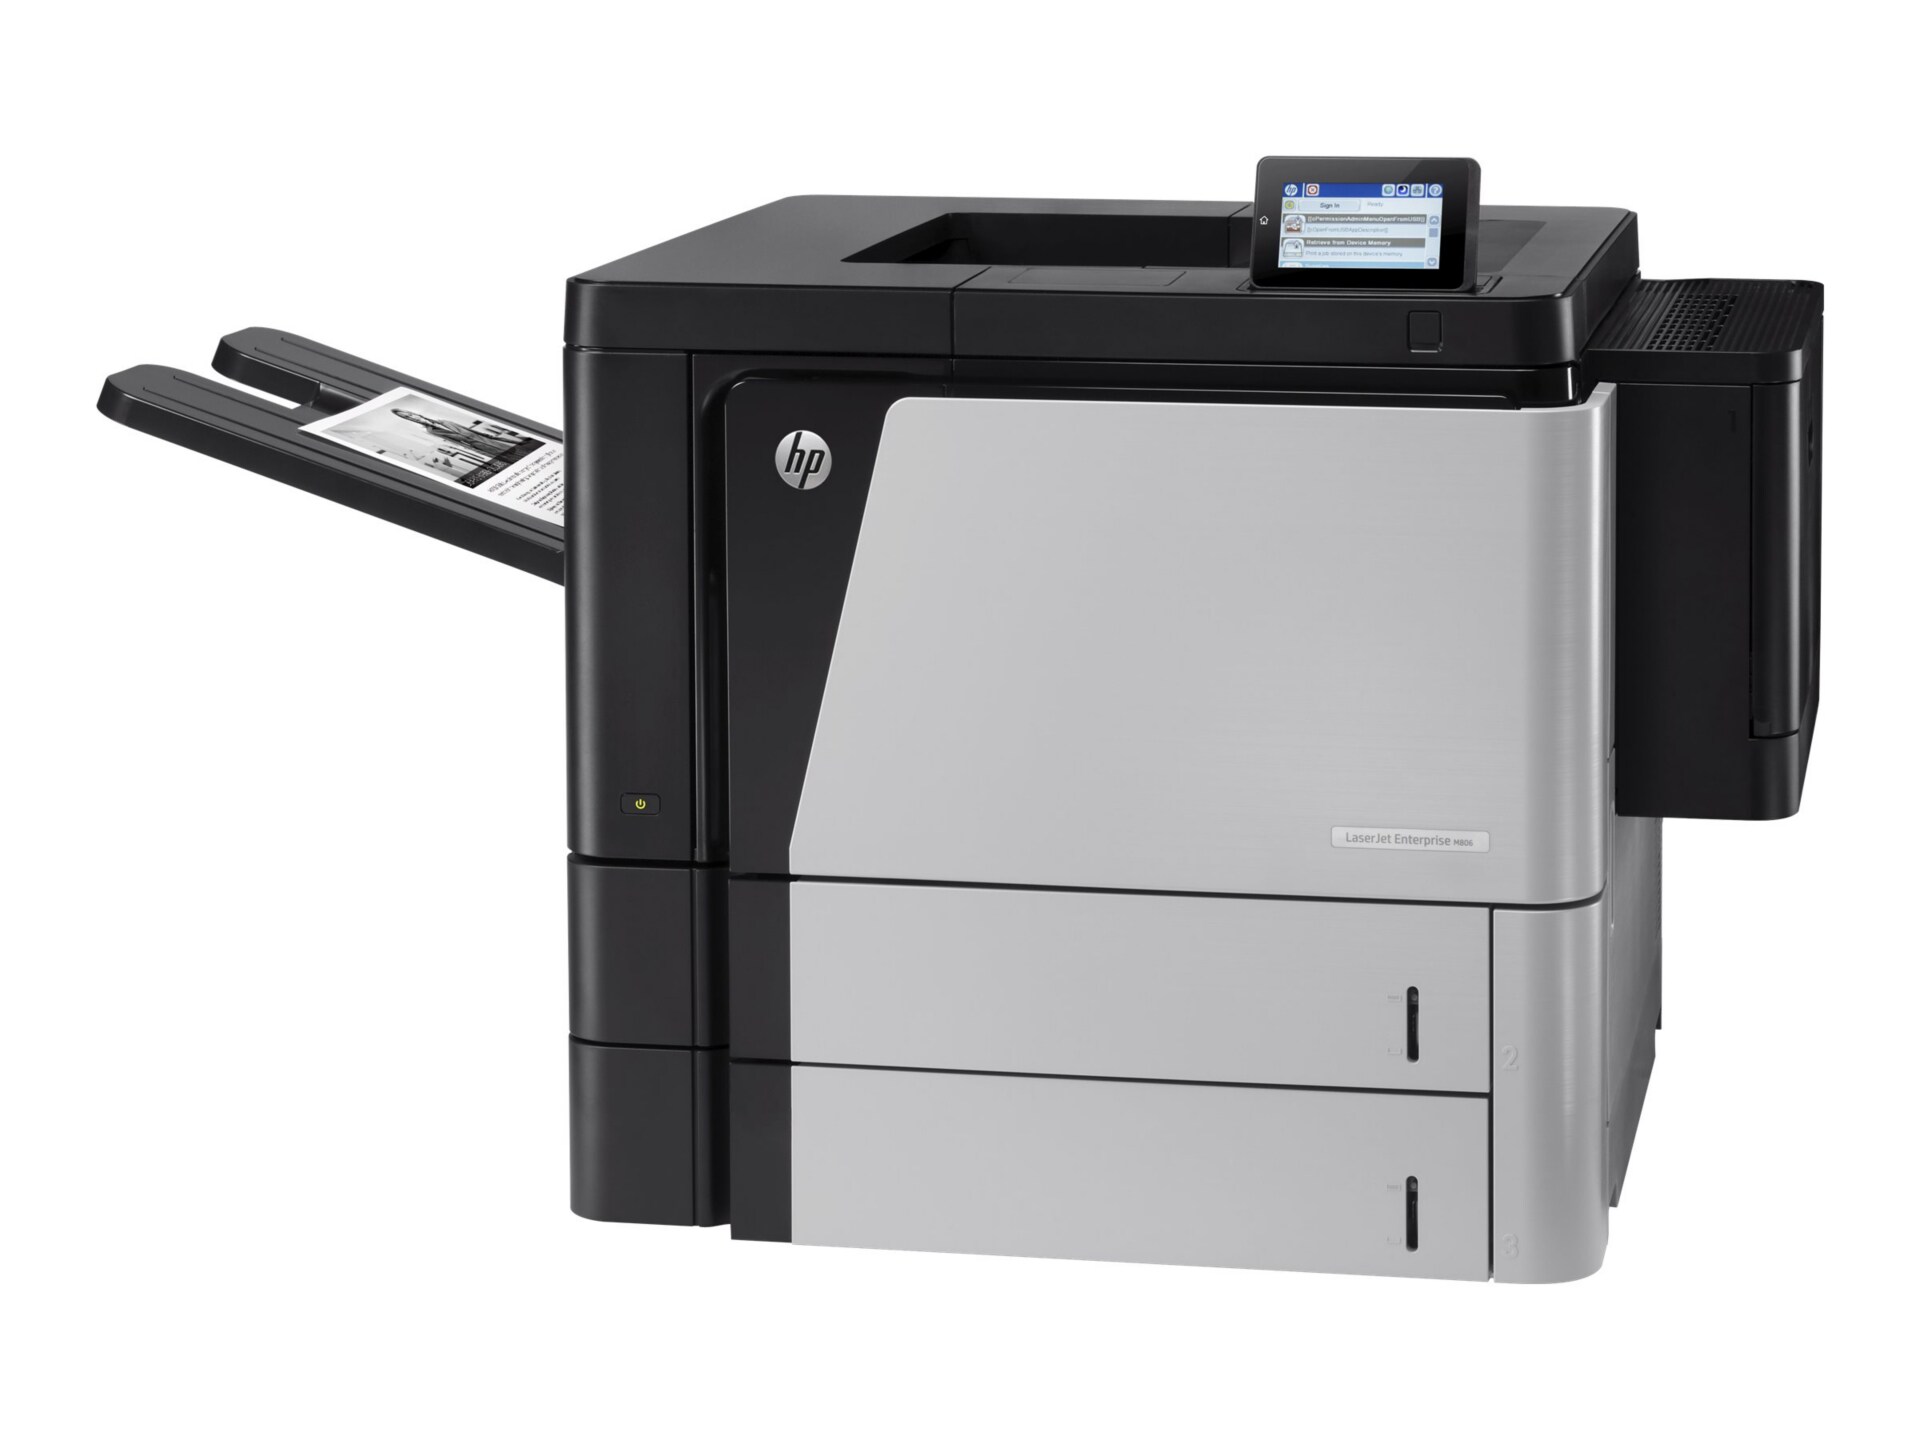 HP LaserJet M806DN Desktop Laser Printer - Monochrome